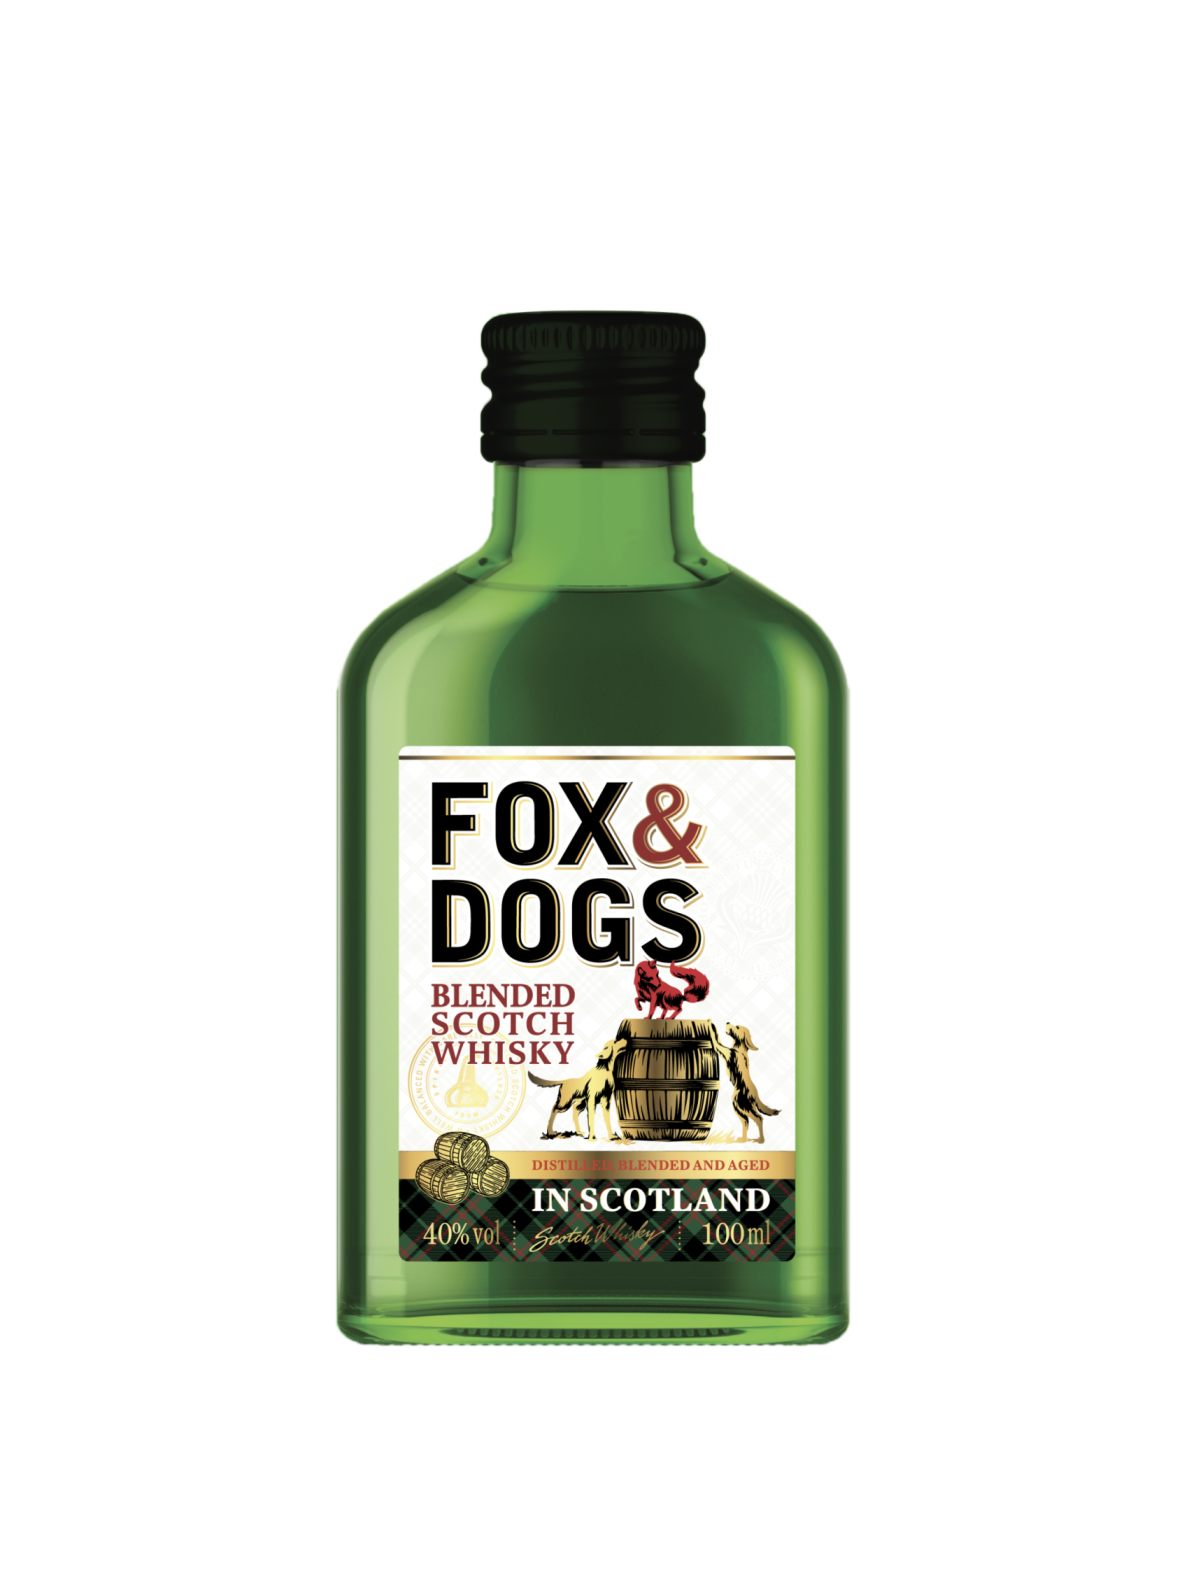 Fox and dogs отзывы. Виски Фокс энд догс 0.5. Виски Фокс энд догс купаж 0.7. Виски купажированный"Фокс энд догс"0.5л. Виски Фокс энд догс 0,5л 40%.